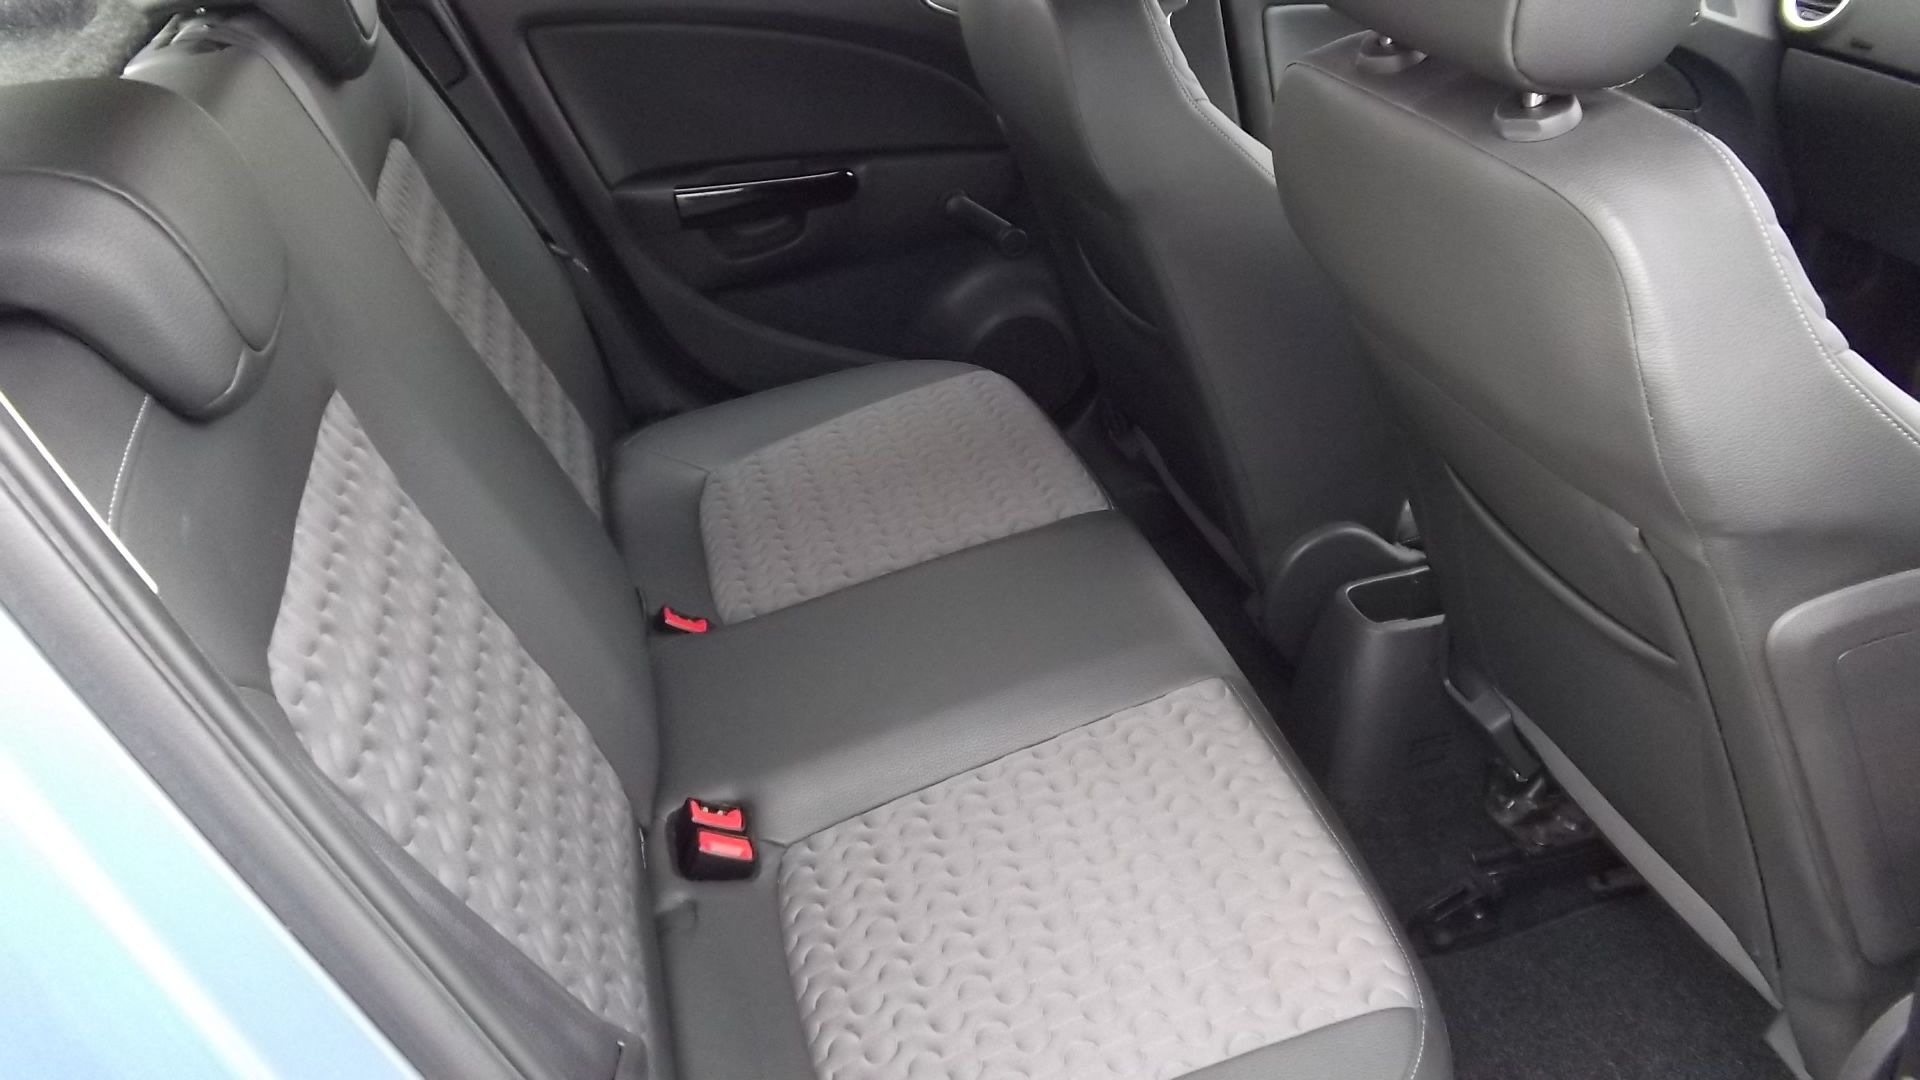 2014 Vauxhall Corsa Se 5Dr Hatchback - Full Service History - CL505 - NO VAT ON THE HAMMER - - Image 23 of 24